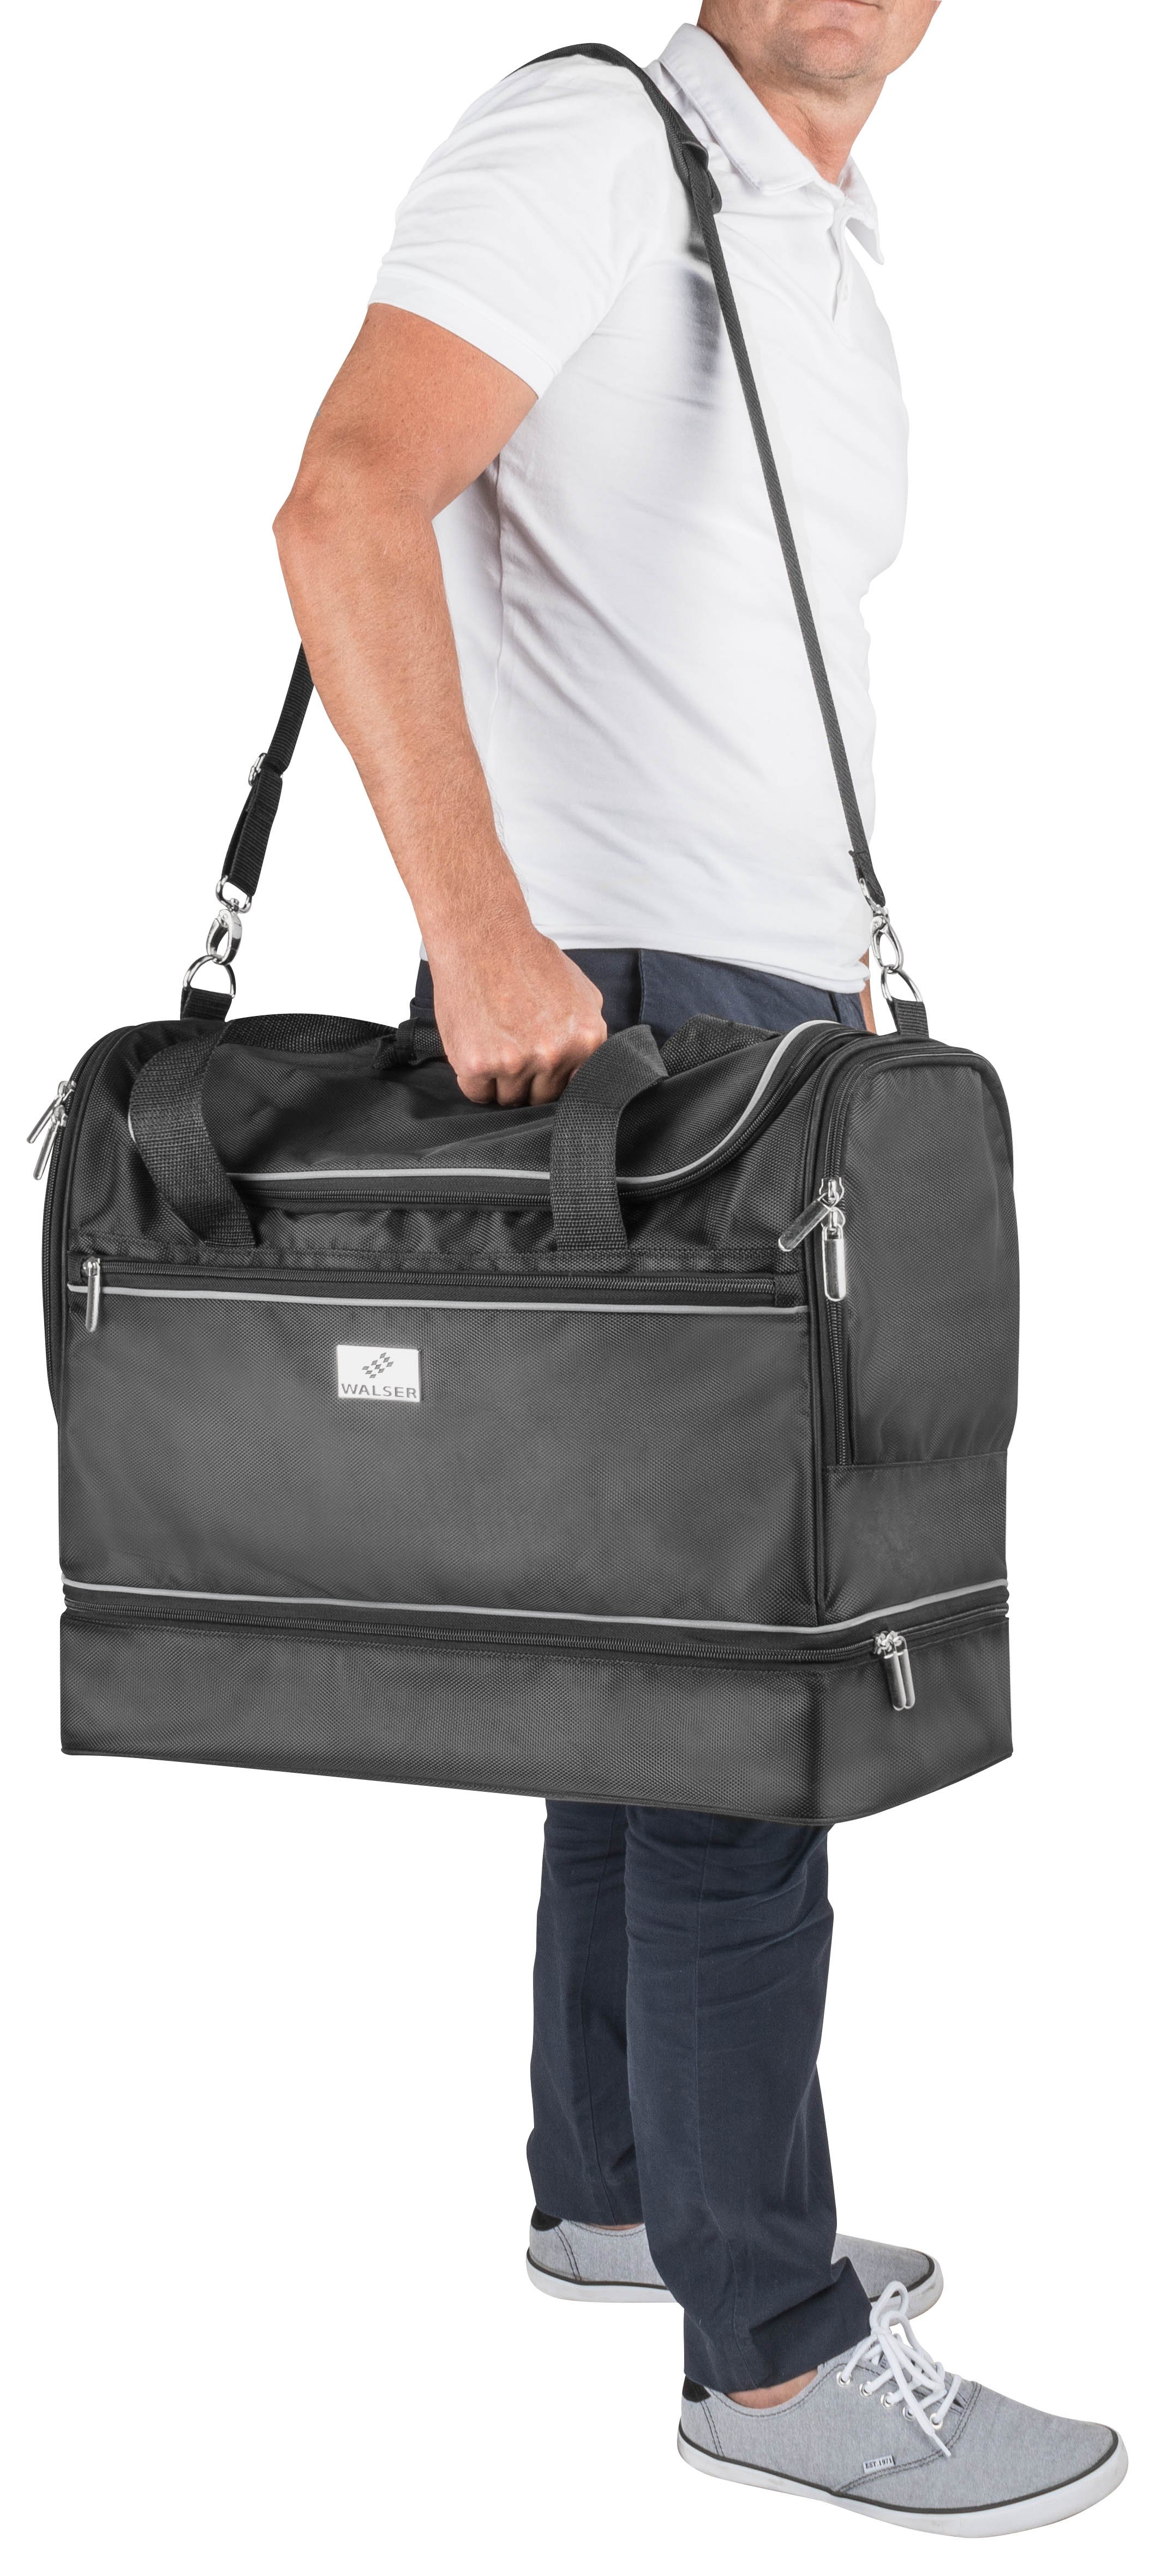 Carbags sports bag 50x30x40cm black